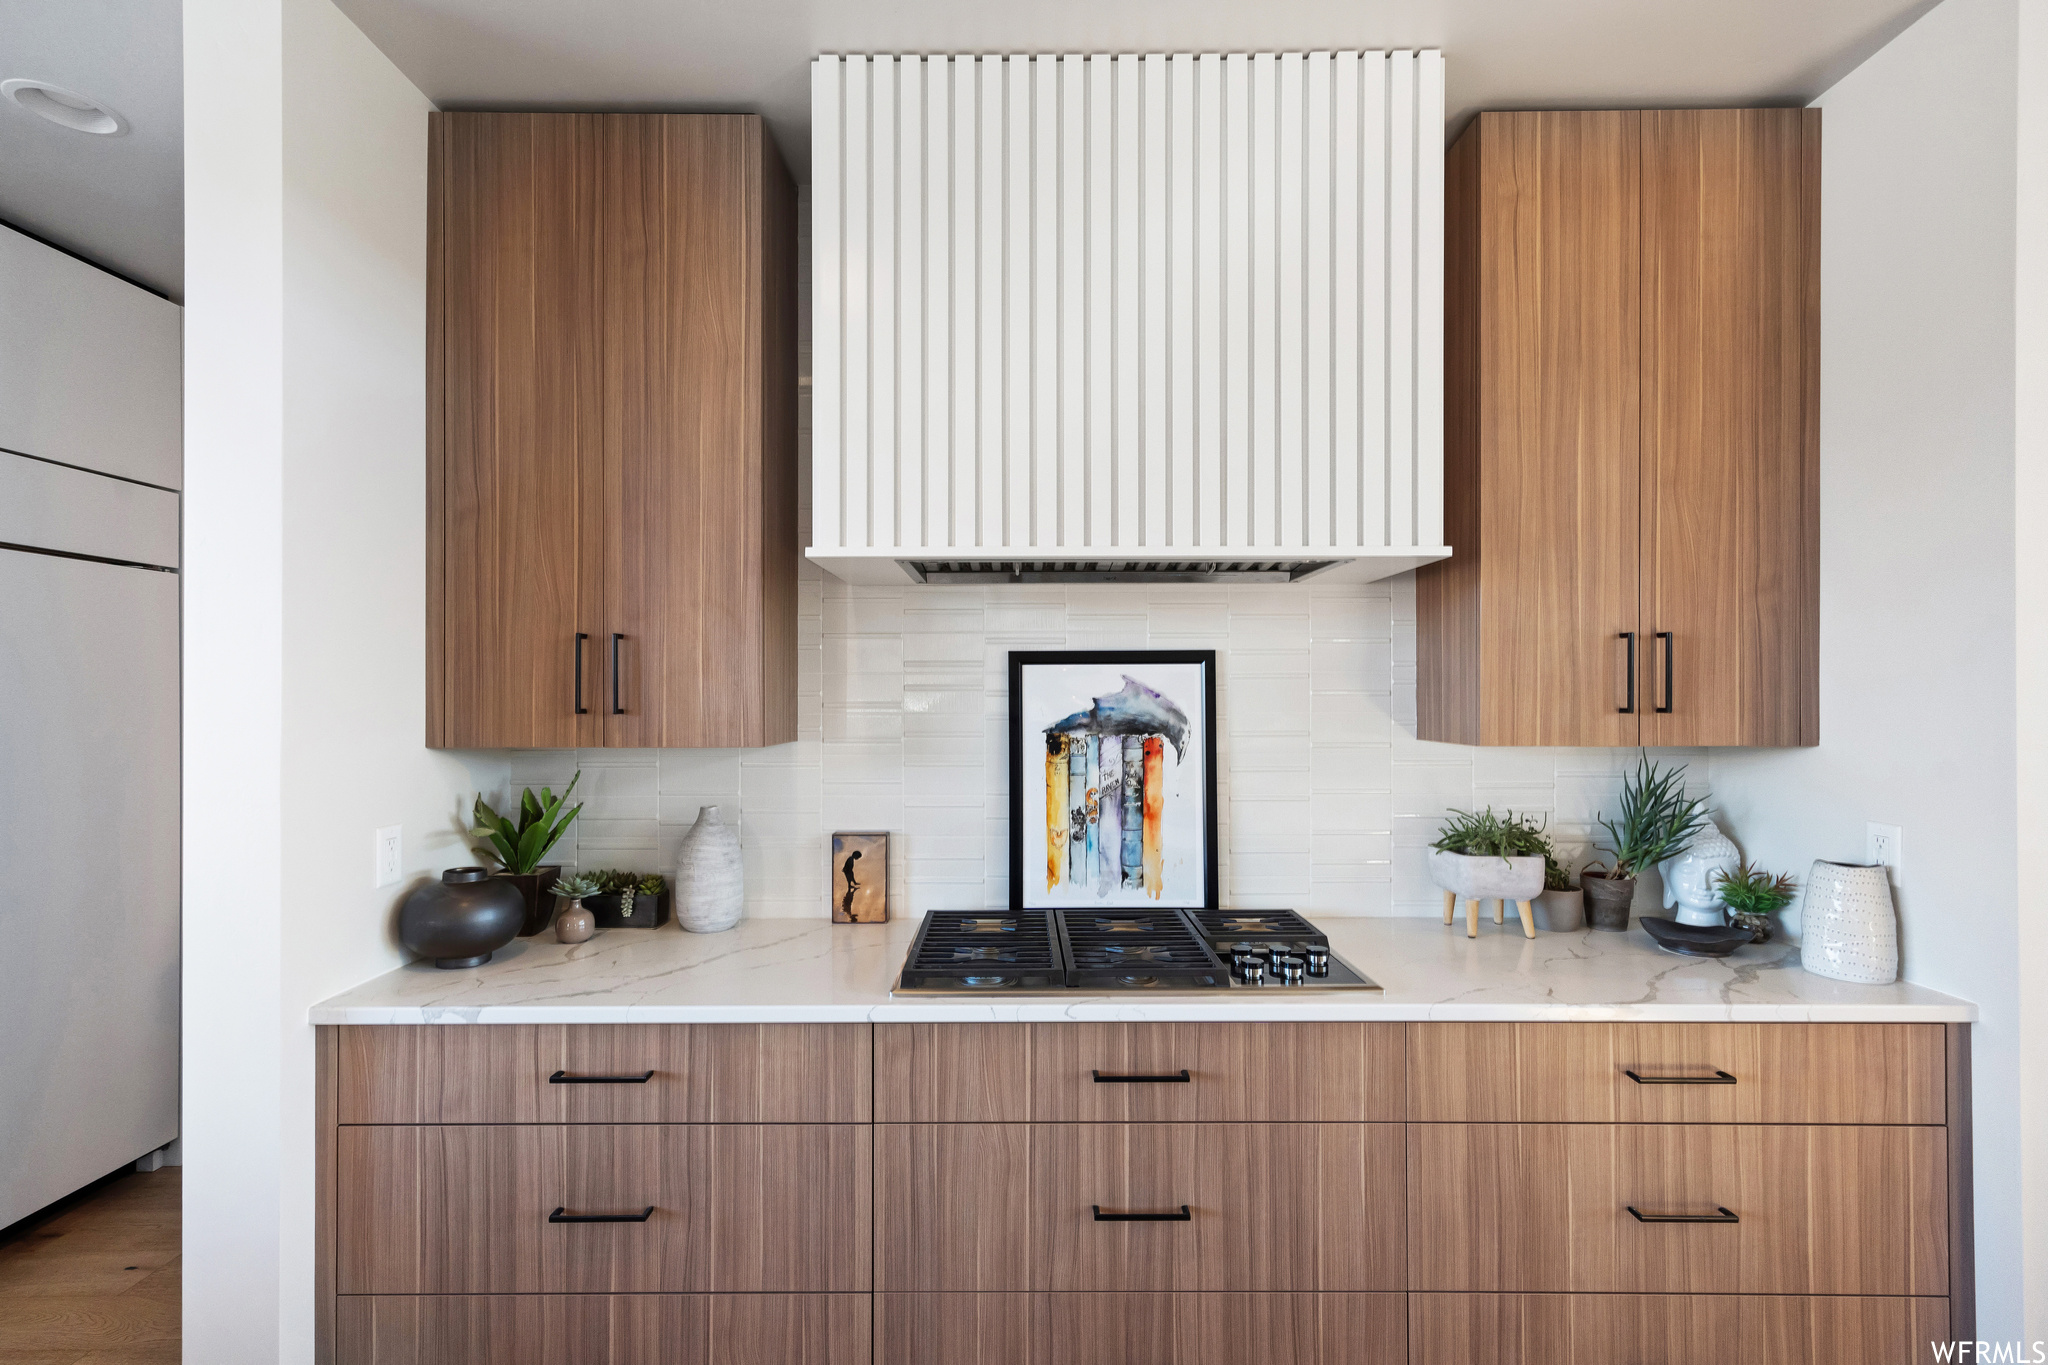 Kitchen featuring gas stovetop, backsplash, radiator, and hardwood / wood-style flooring